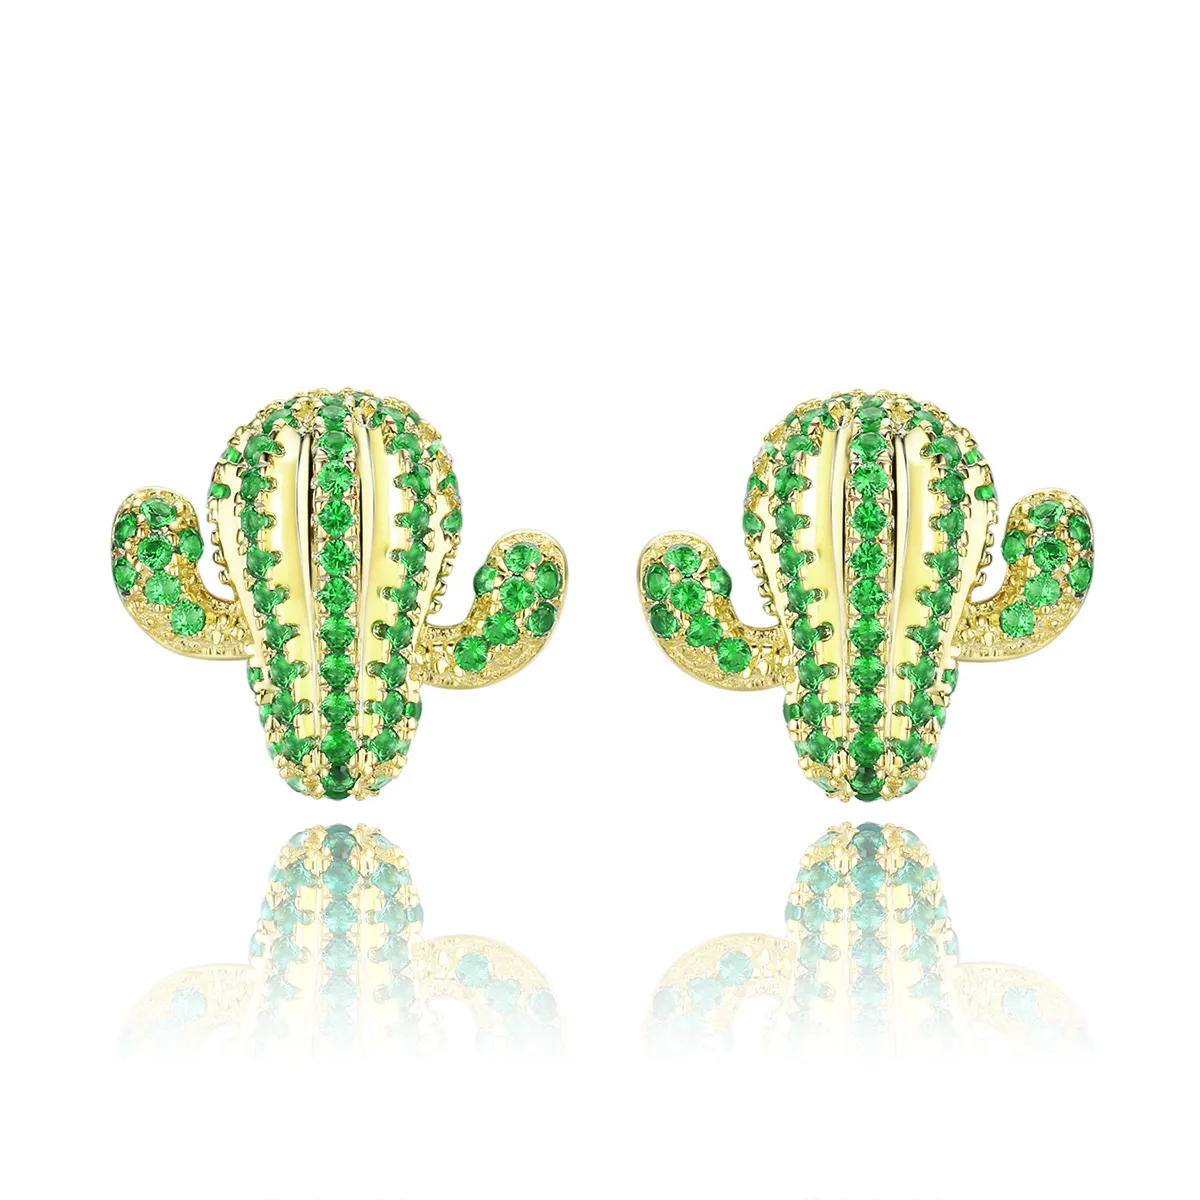 Pandora Style Cactus Stud Earrings - BSE013